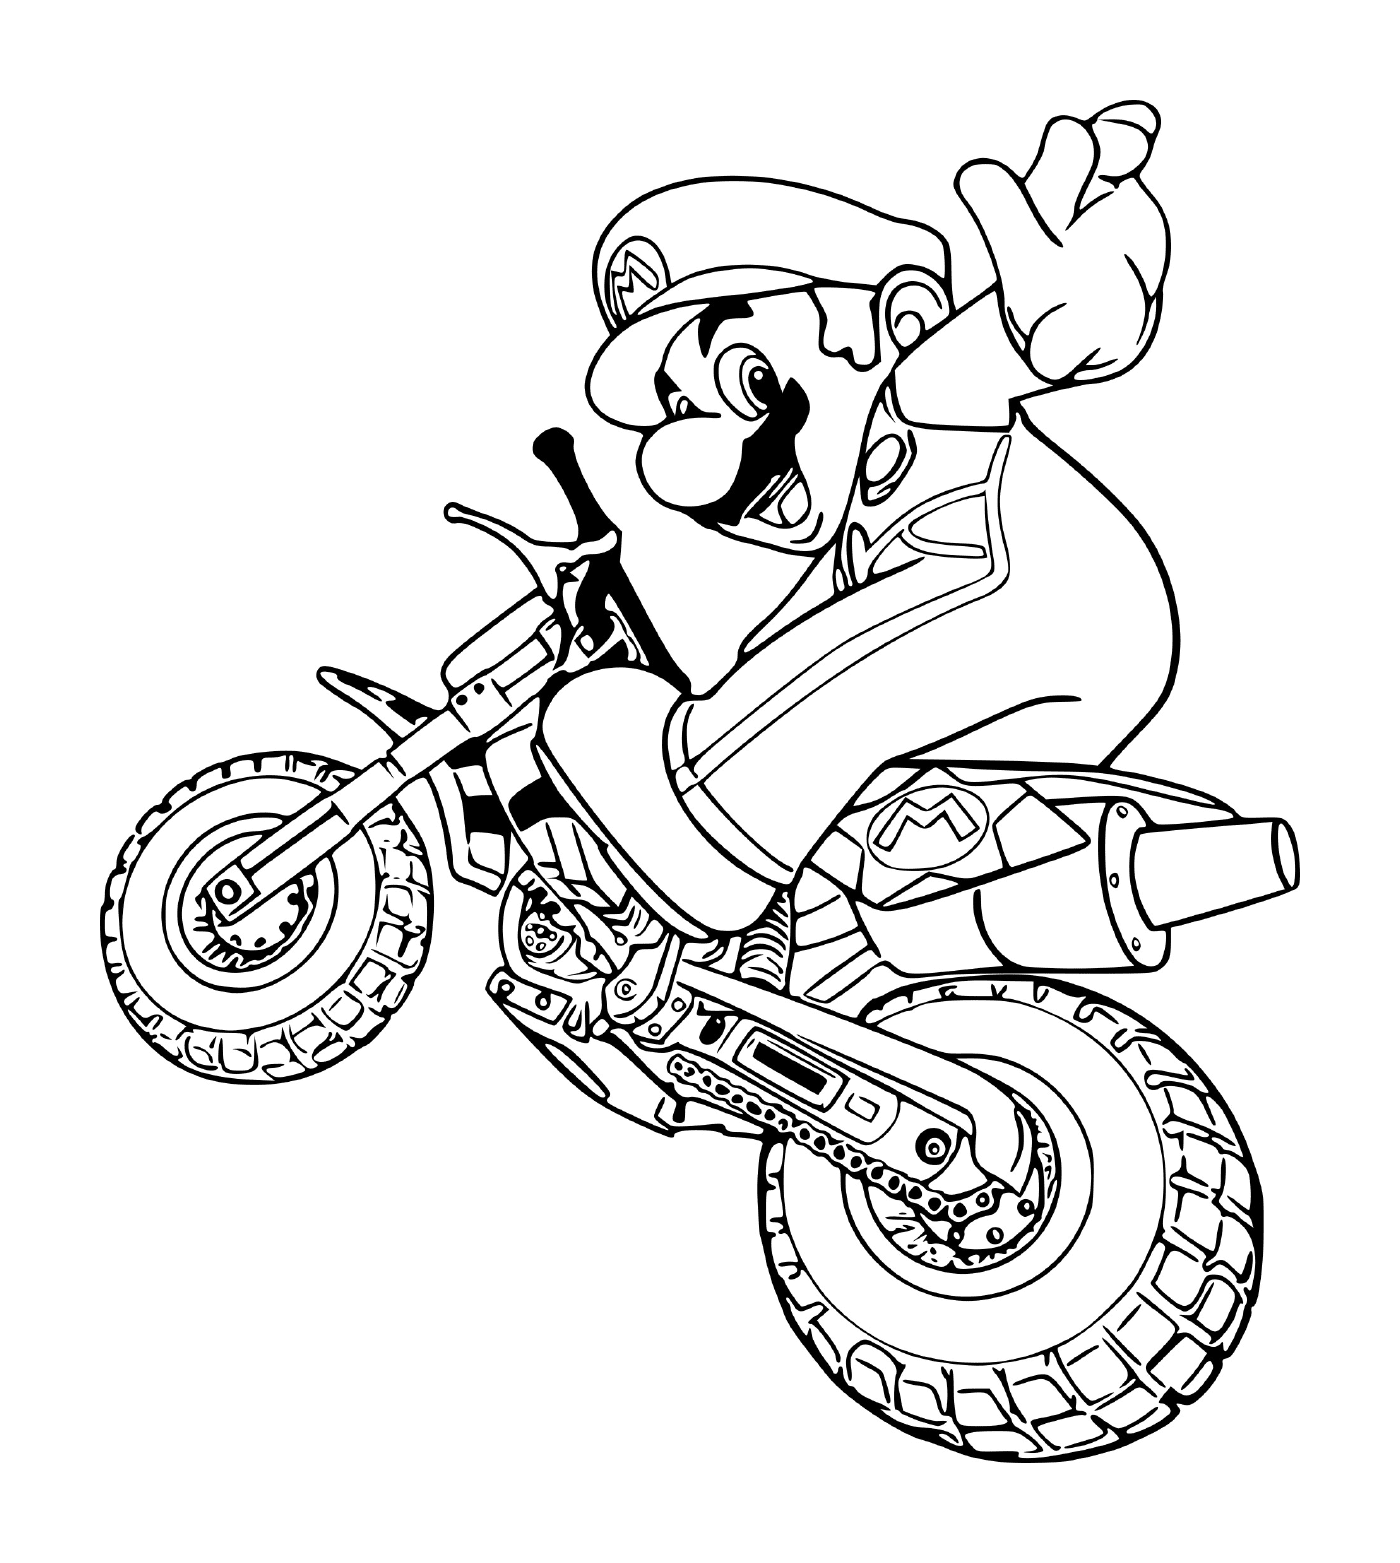  Mario im Motorrad-Modus, auf einem Motorrad 